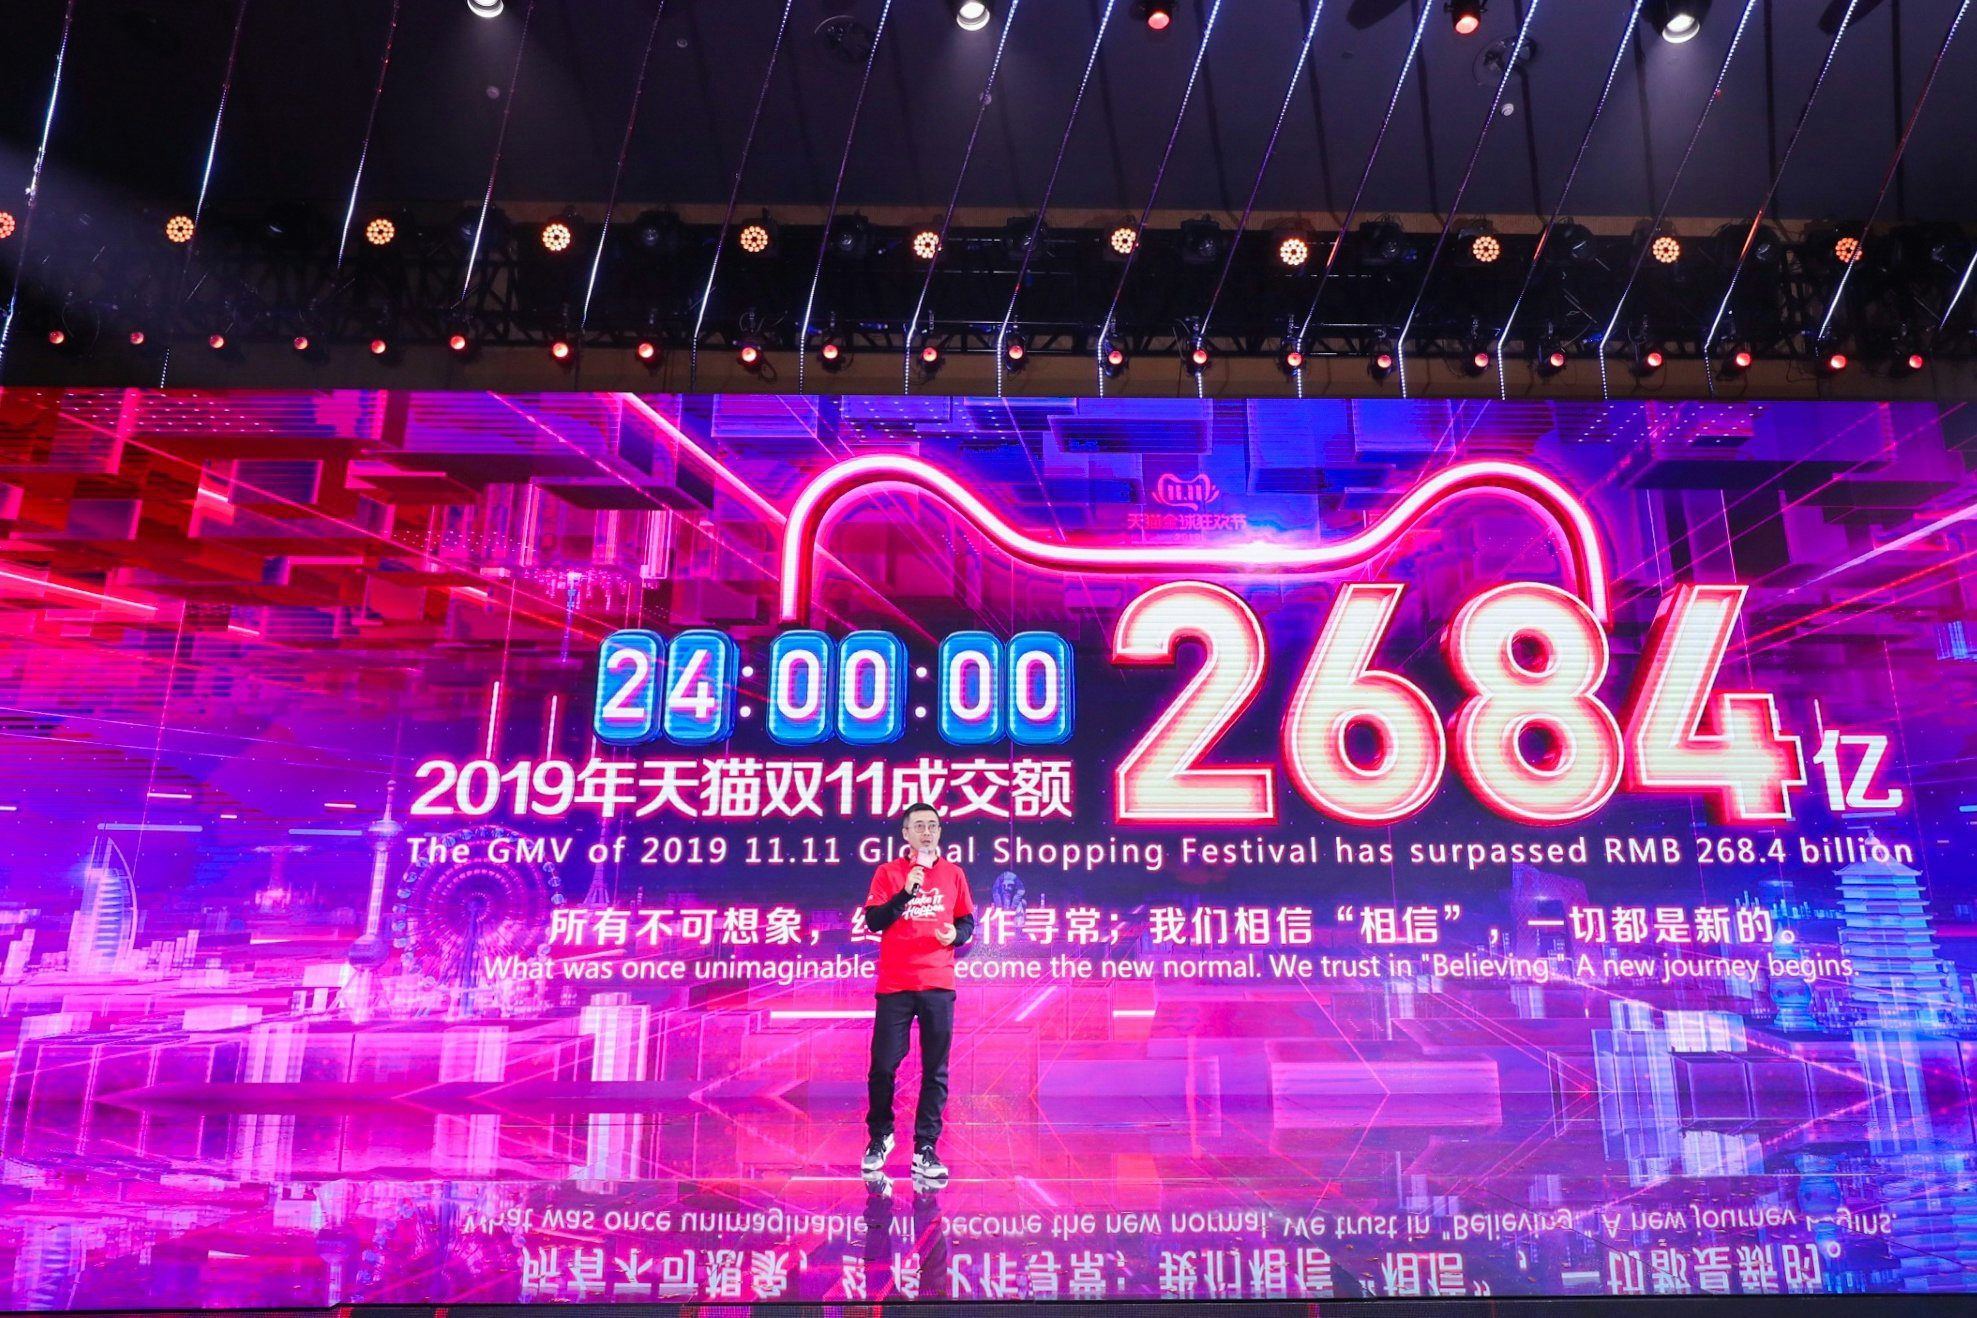 The President of Taobao speaks at Alibaba's Global Shopping Festival on November 11, 2019. Photo: Alibaba.